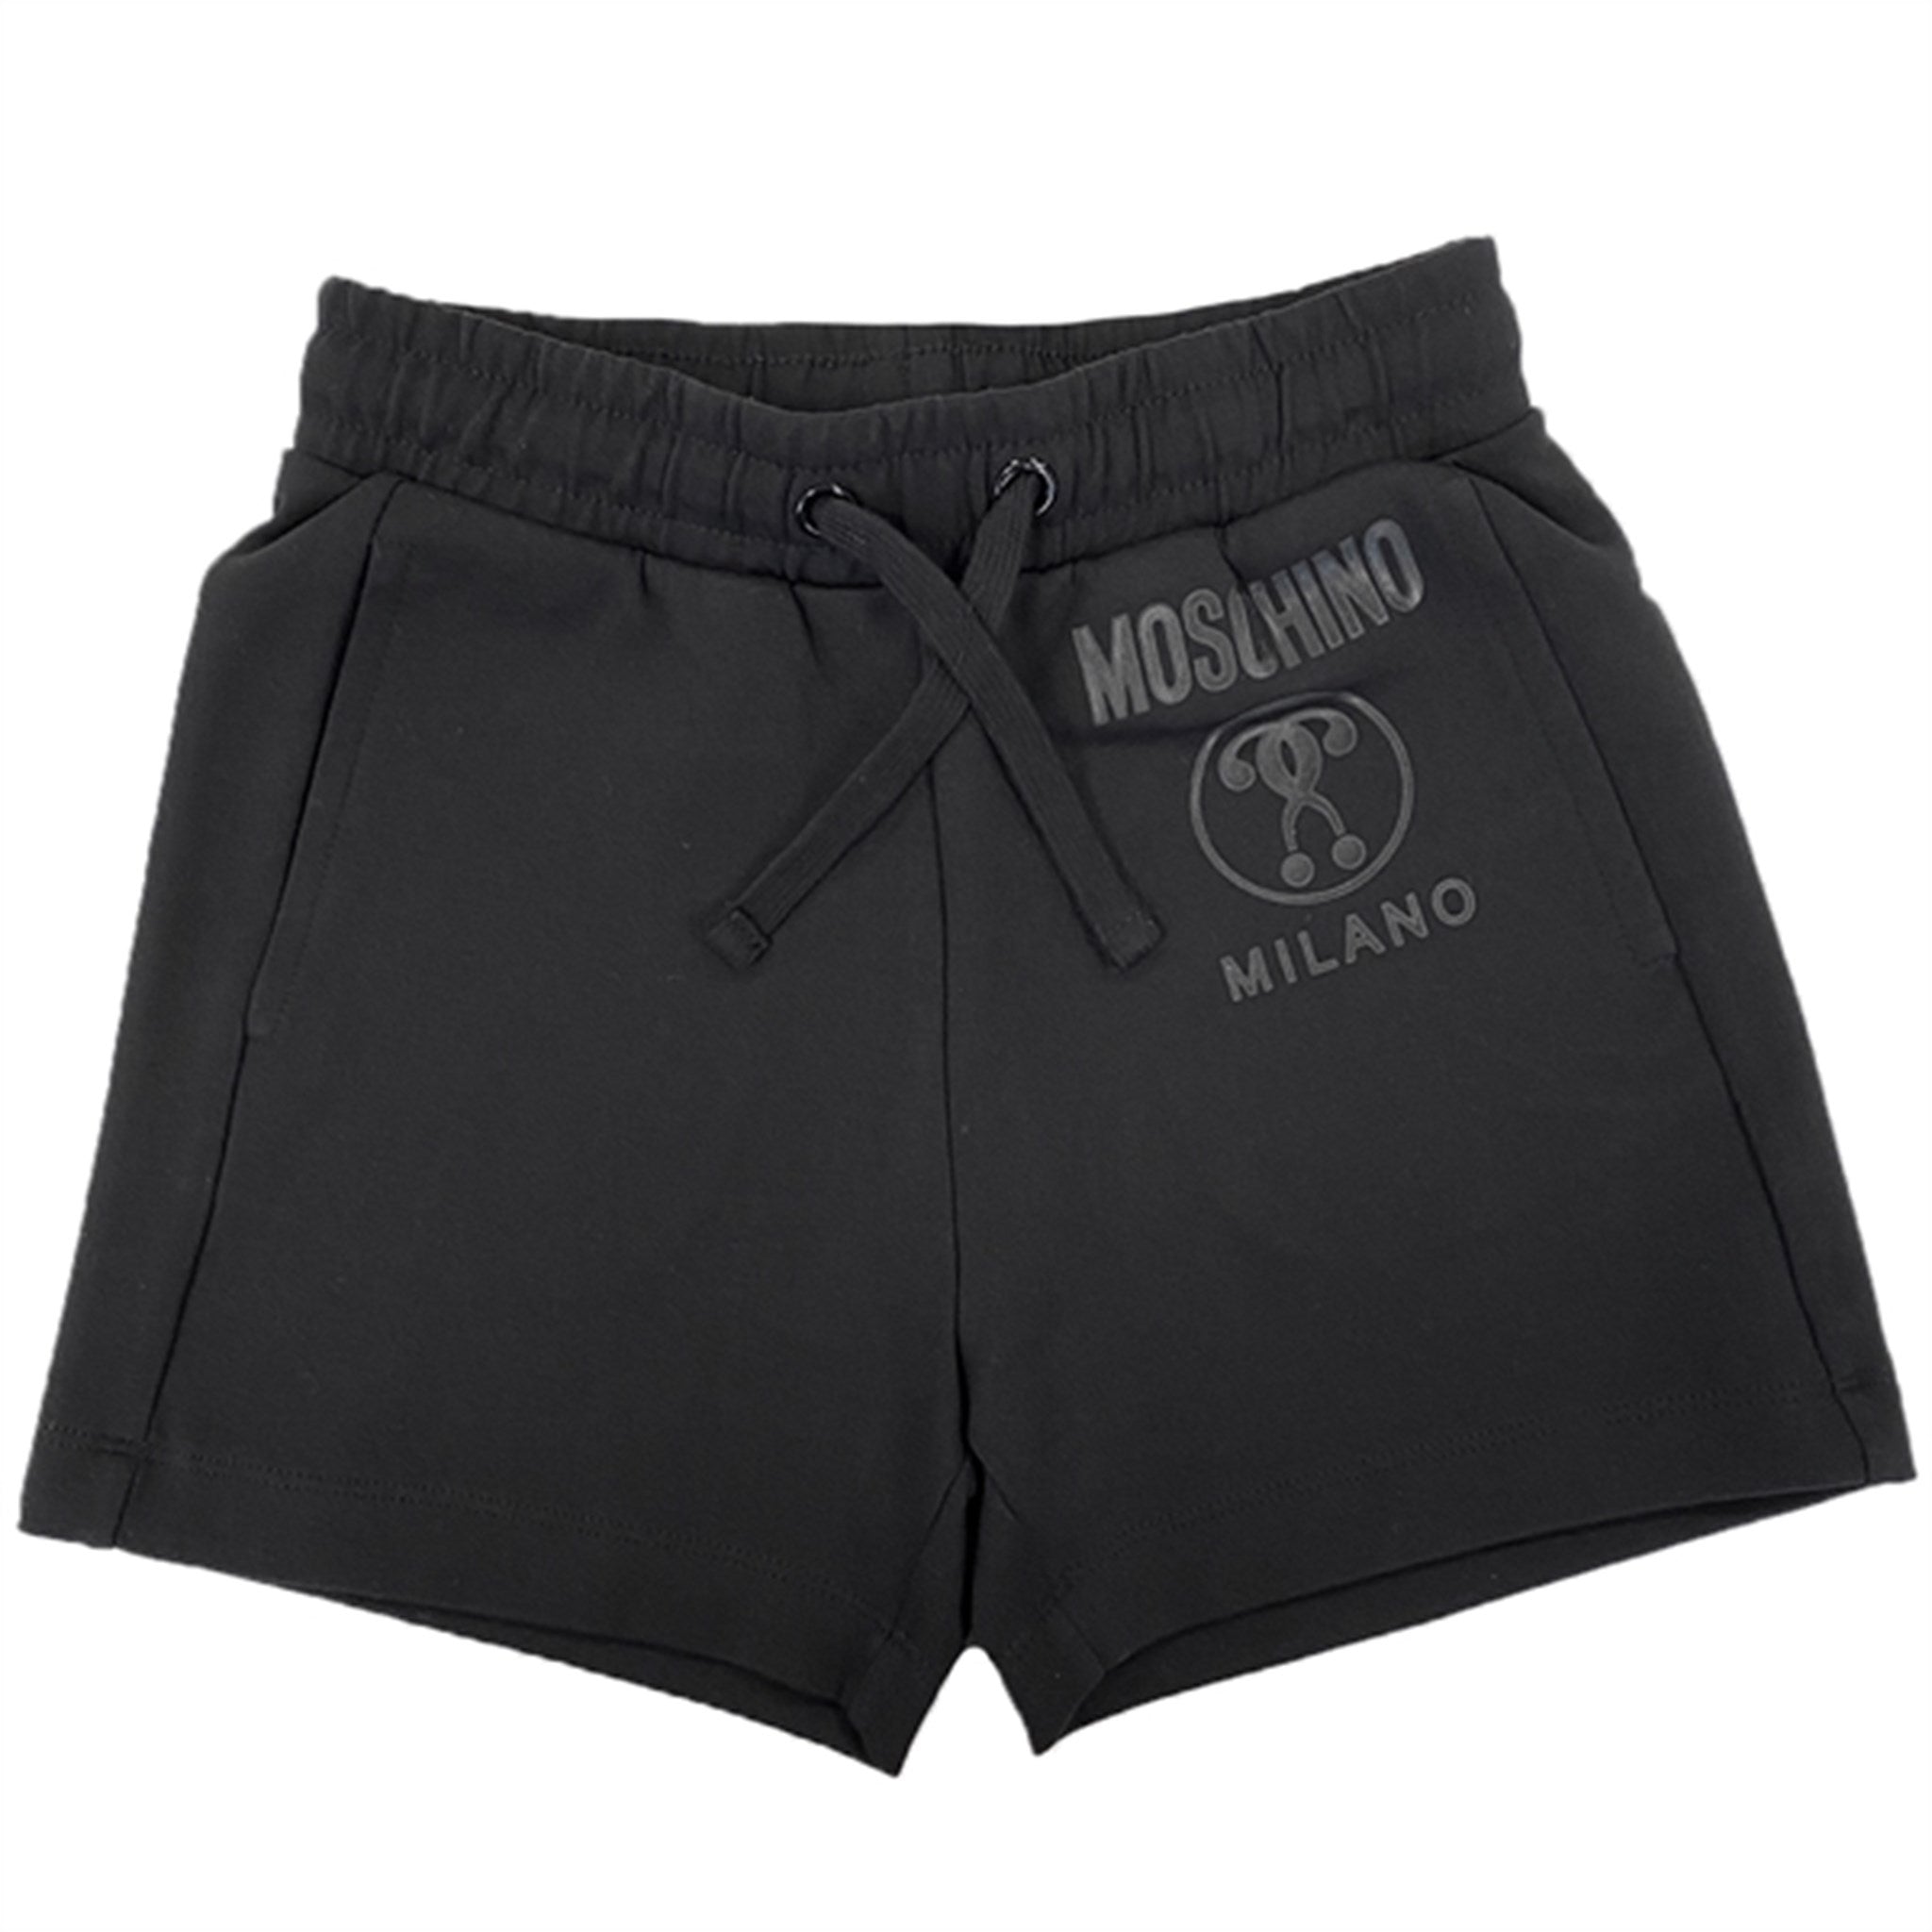 Moschino Nero Black Shorts